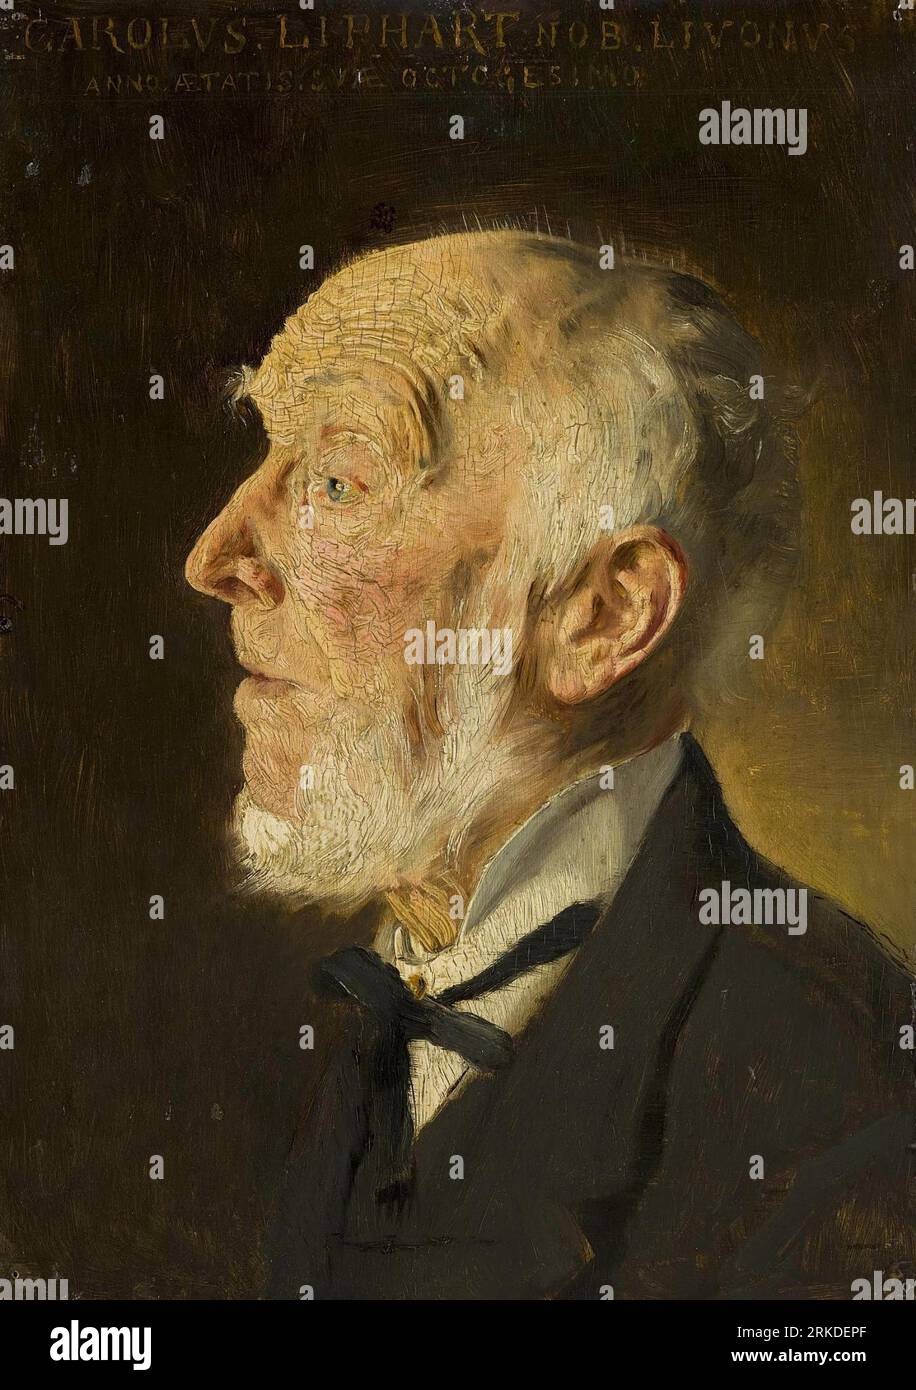 Portrait of Karl Liphart between 1890 and 1900 by Ernst Friedrich von Liphart Stock Photo